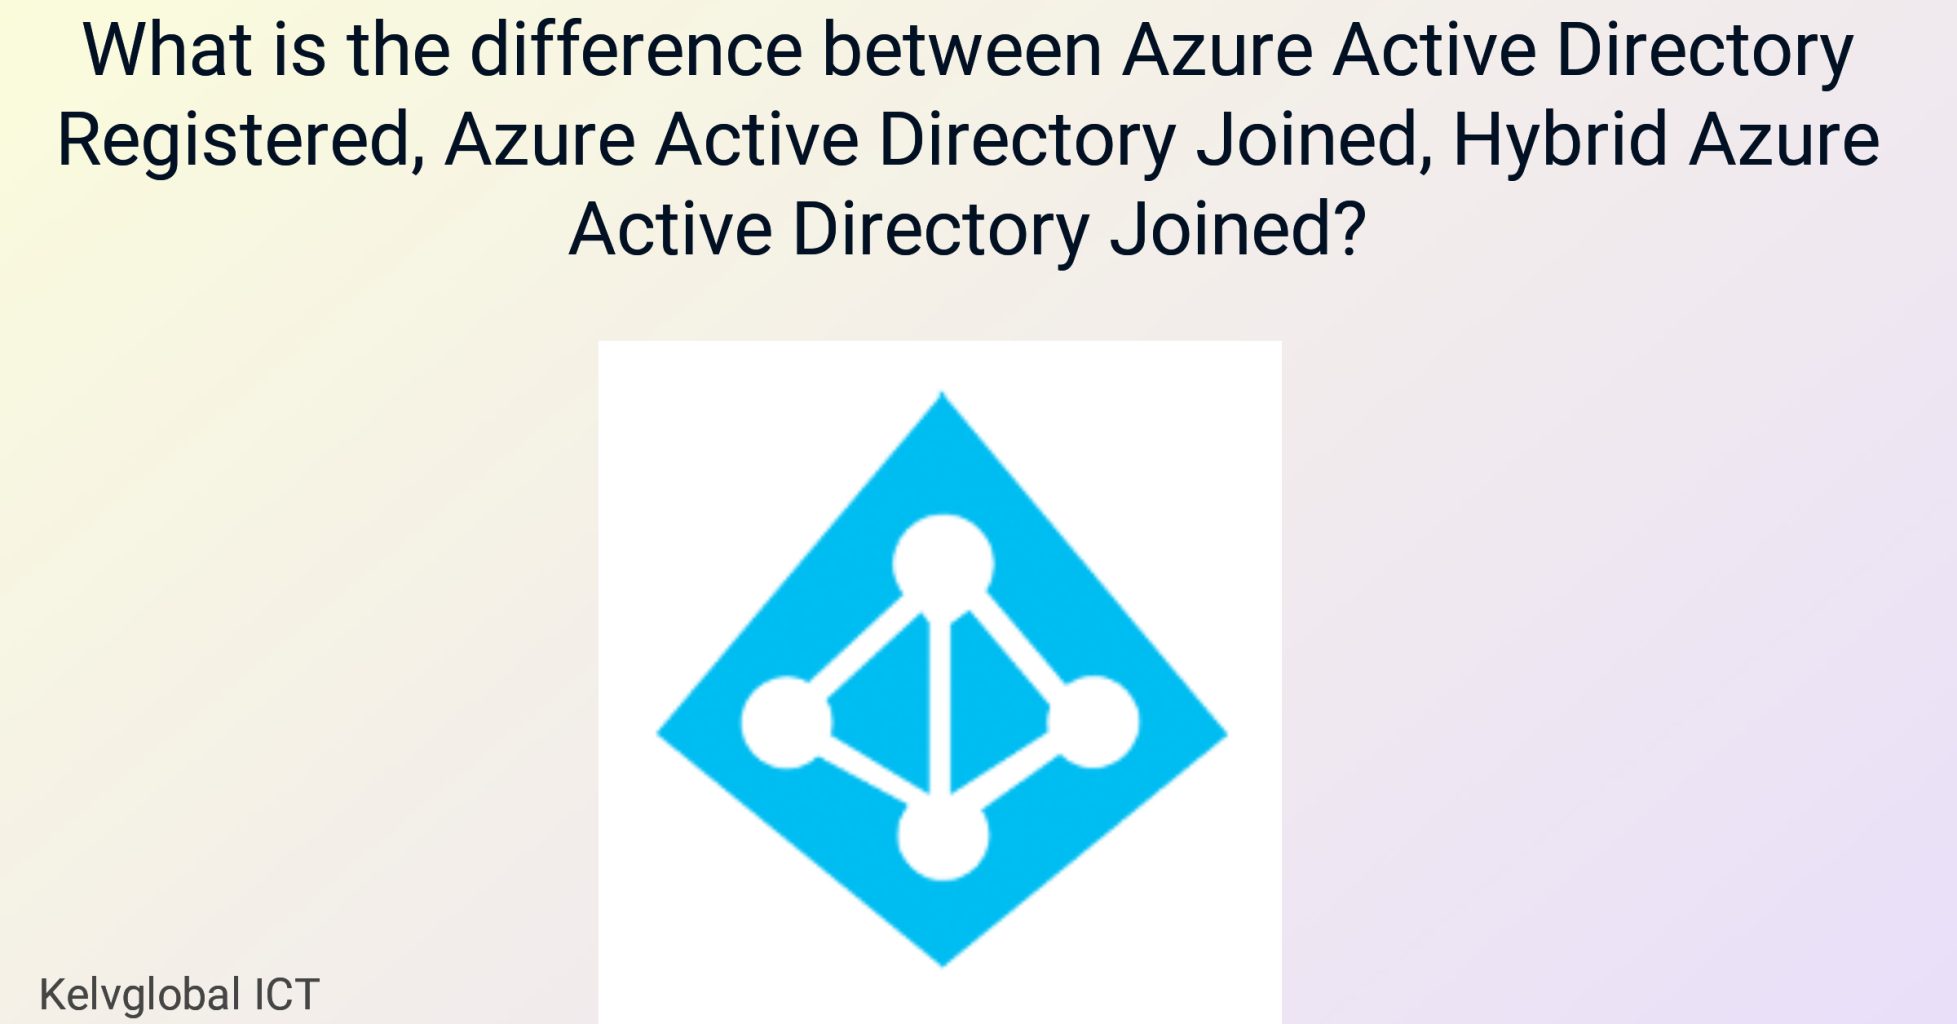 Azure Active Directory Registered, Azure Active Directory Joined, Hybrid Azure Active Directory Joined